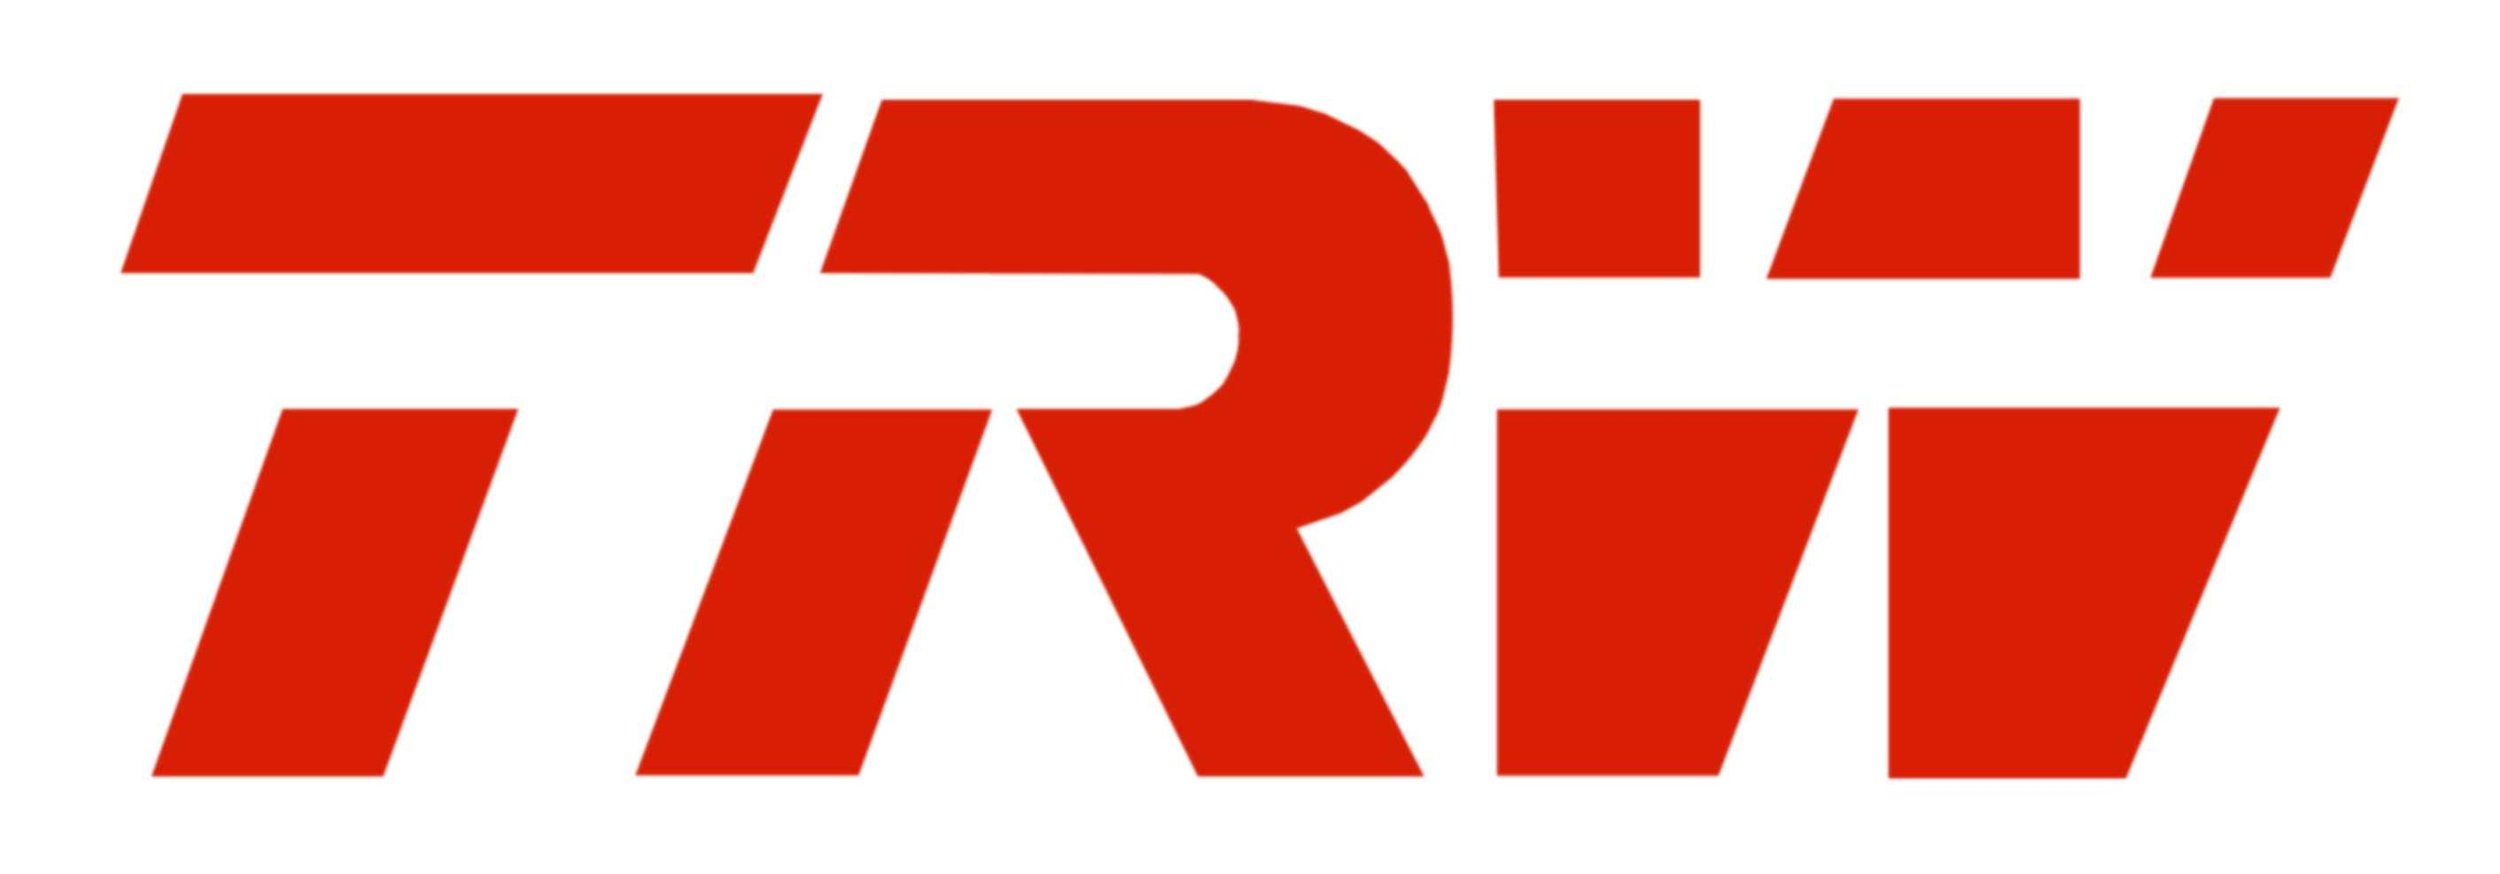 TRW_logo.jpg